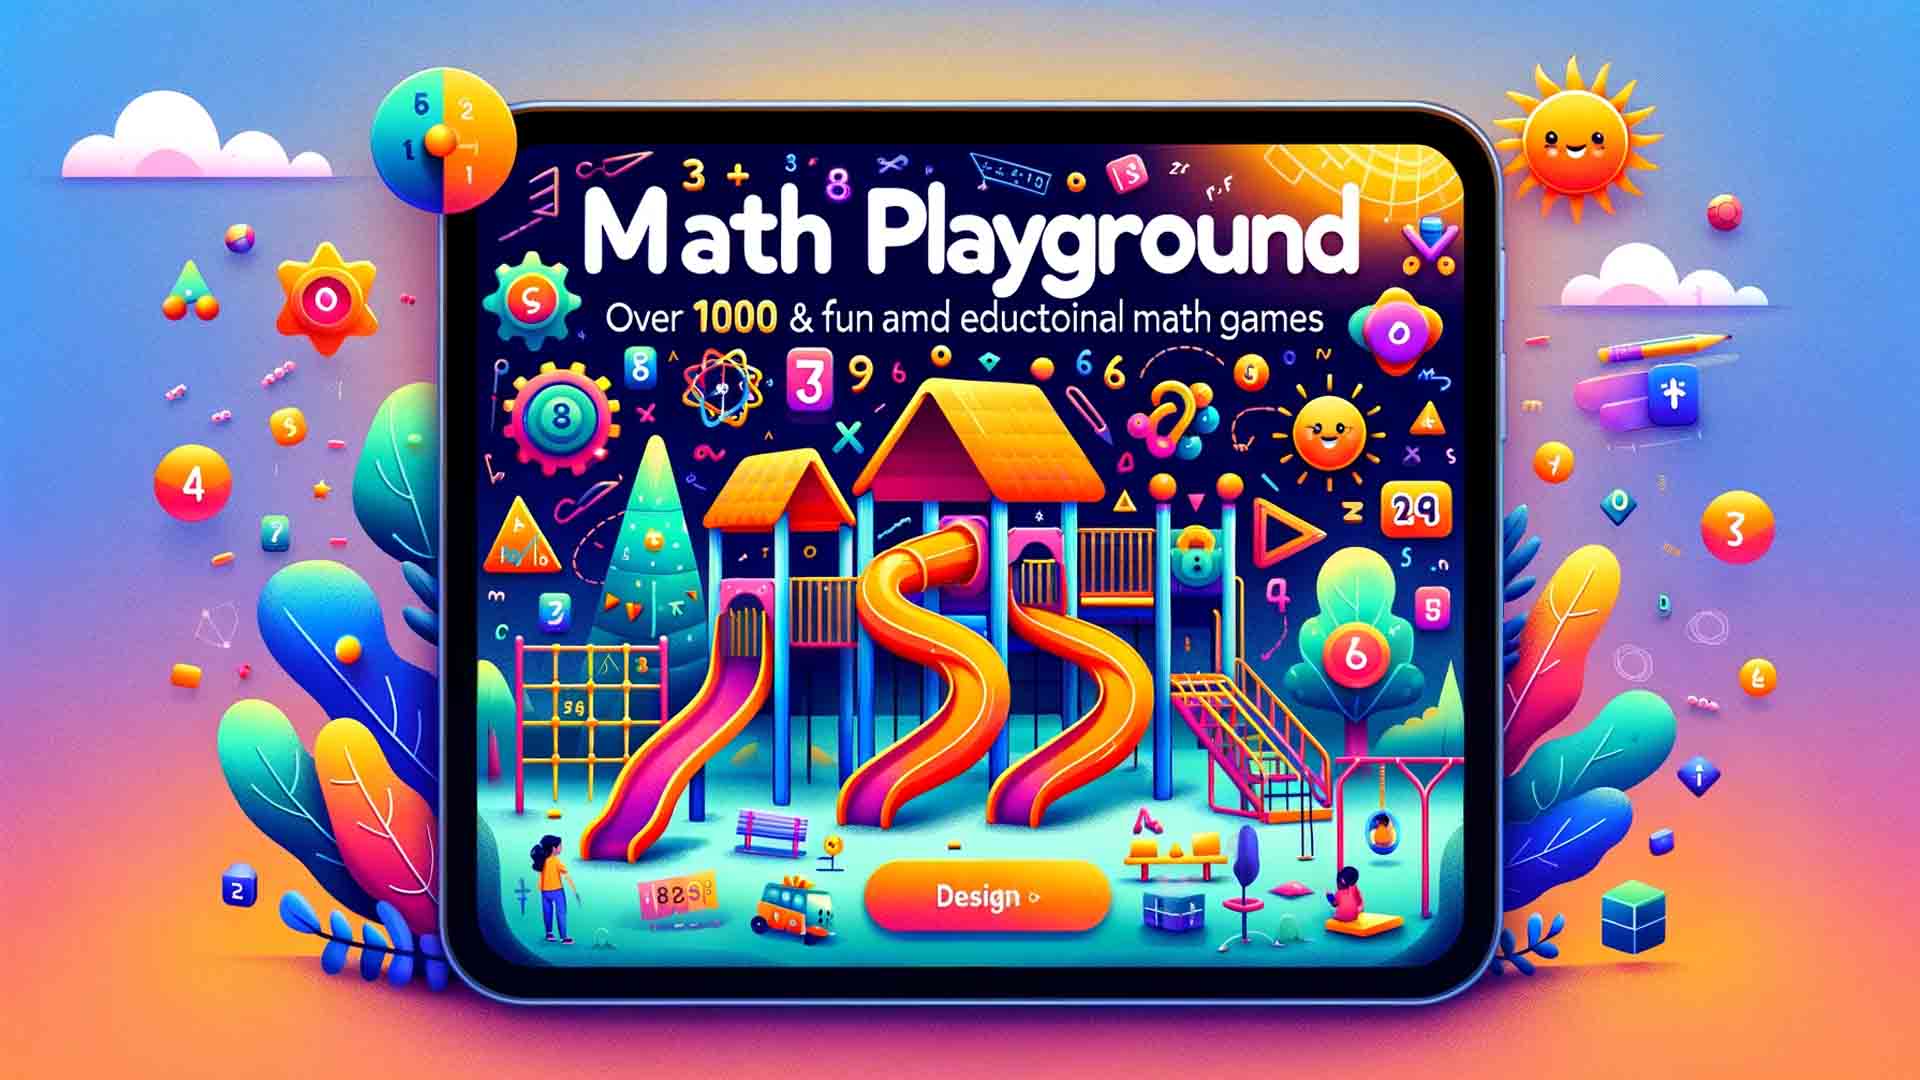 Cool Math Games 66